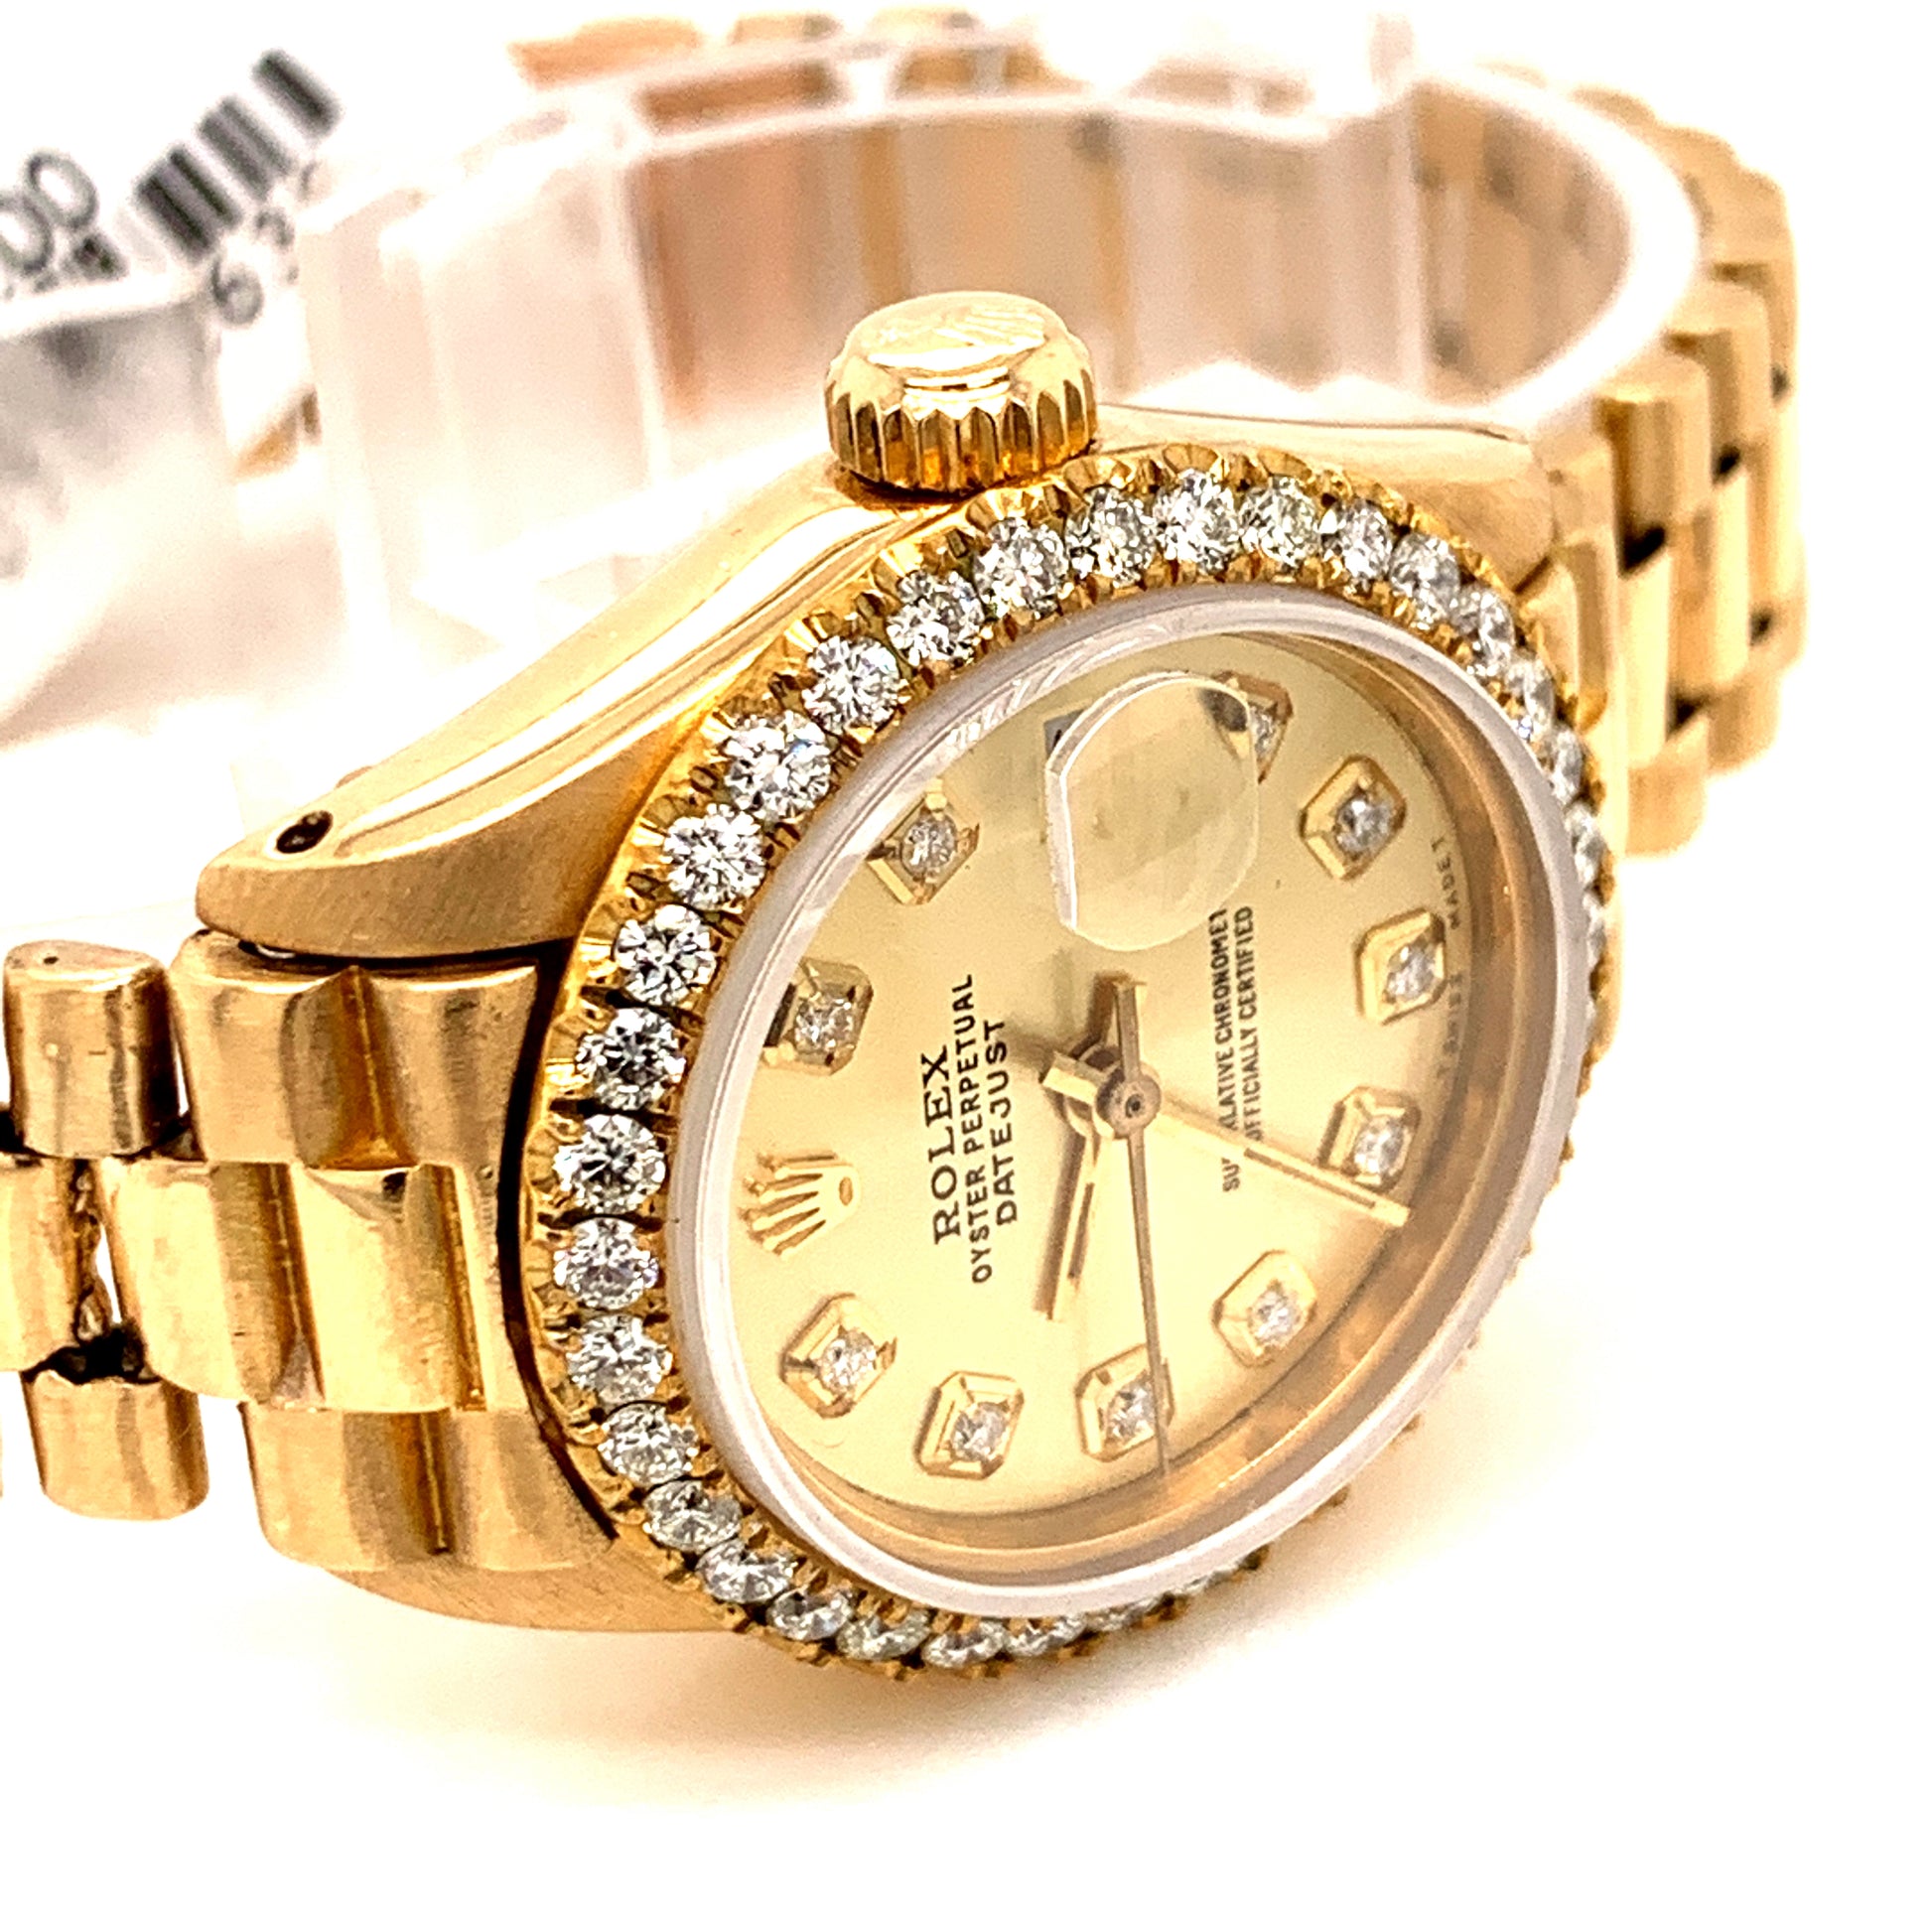 Rolex Lady-Datejust 18k Yellow Gold President Band Diamond Bezel Ref. 6917